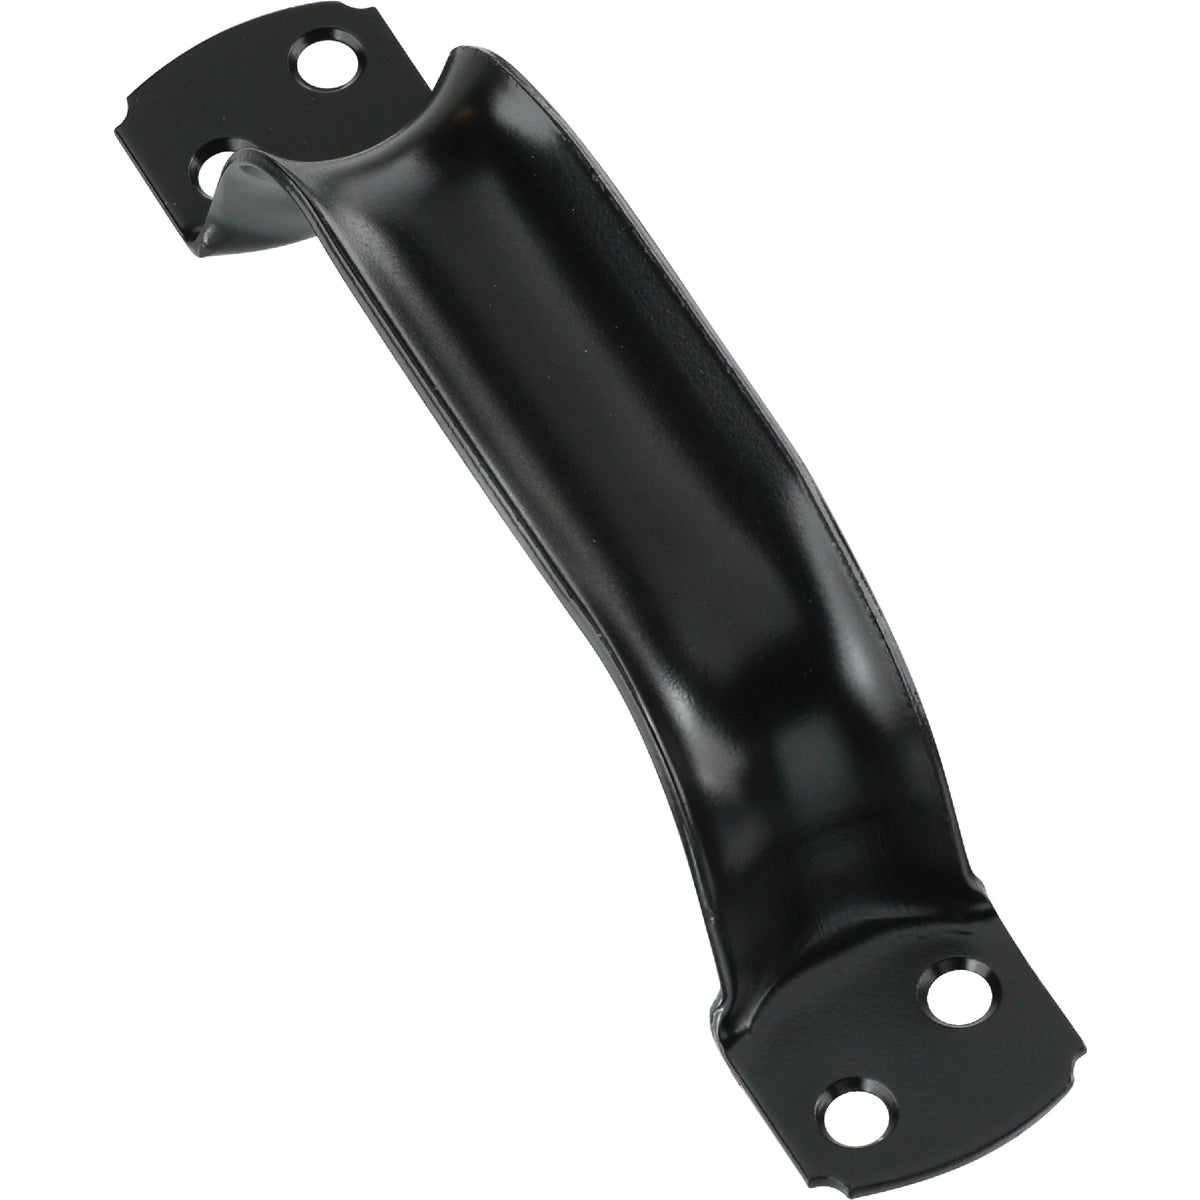 Item 201329, National catalog model No. V6 pull, black for use on metal or wood doors.